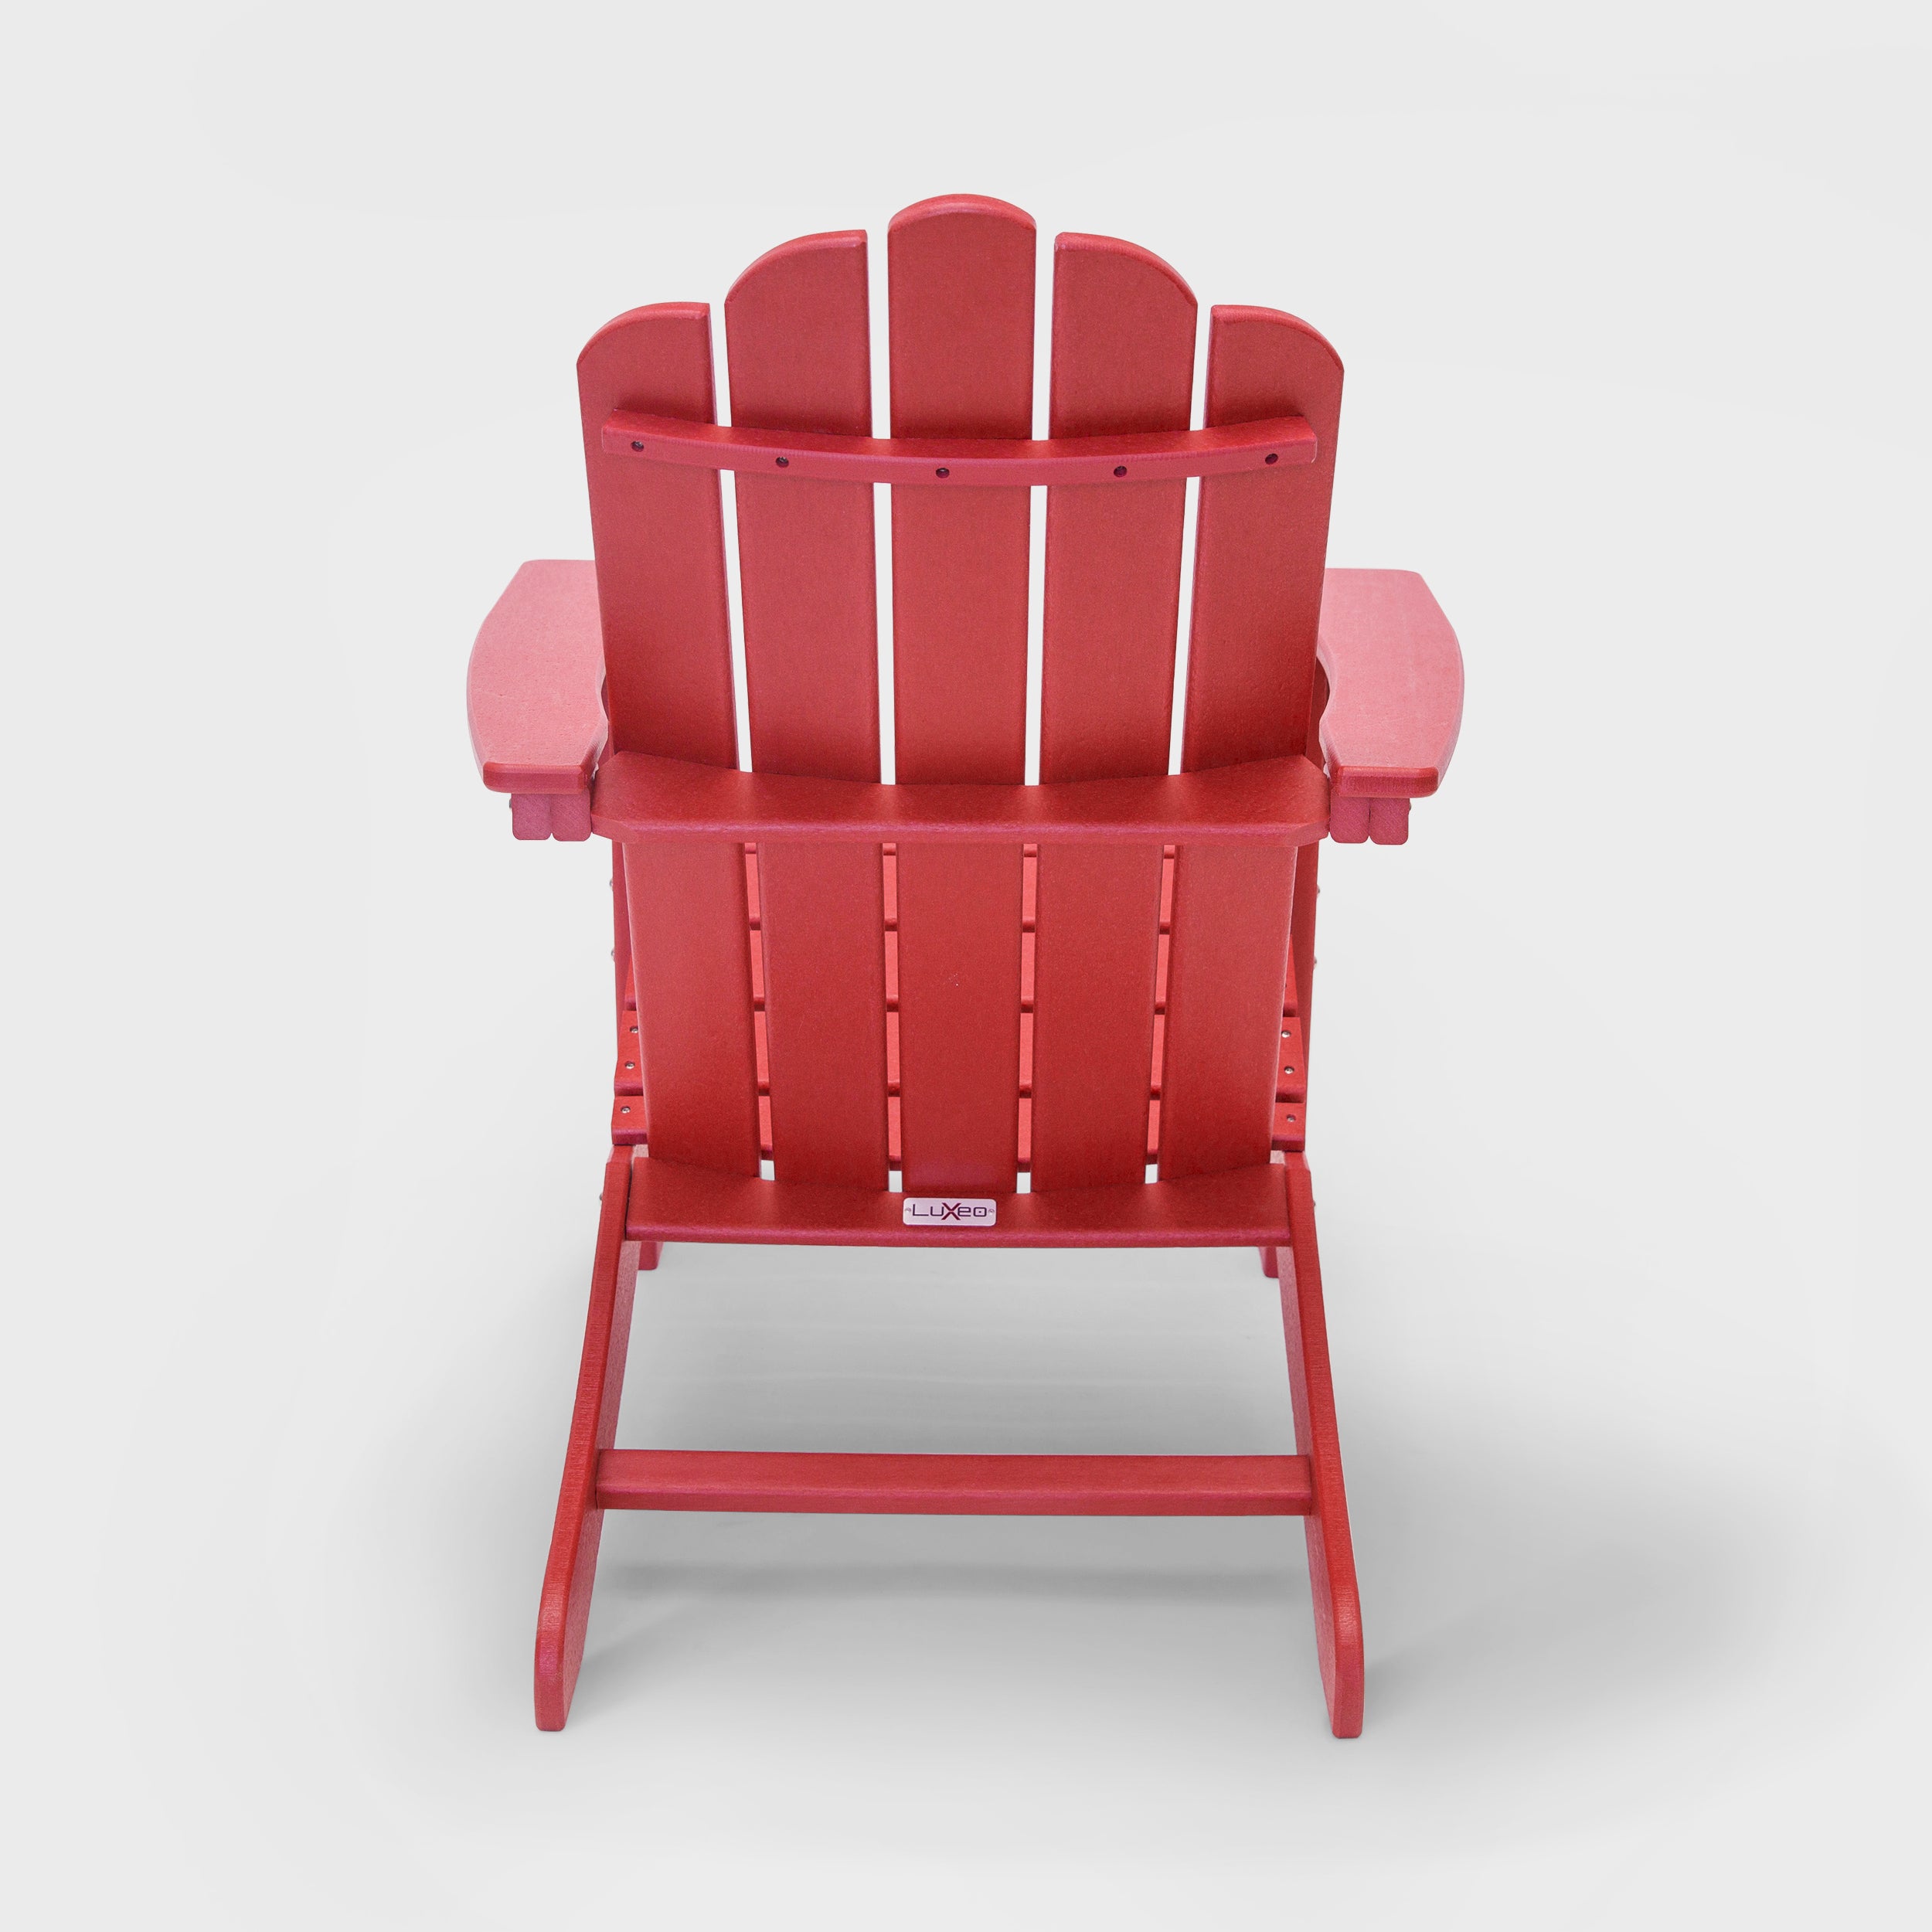 LuXeo Marina HDPE Outdoor Adirondack Chair